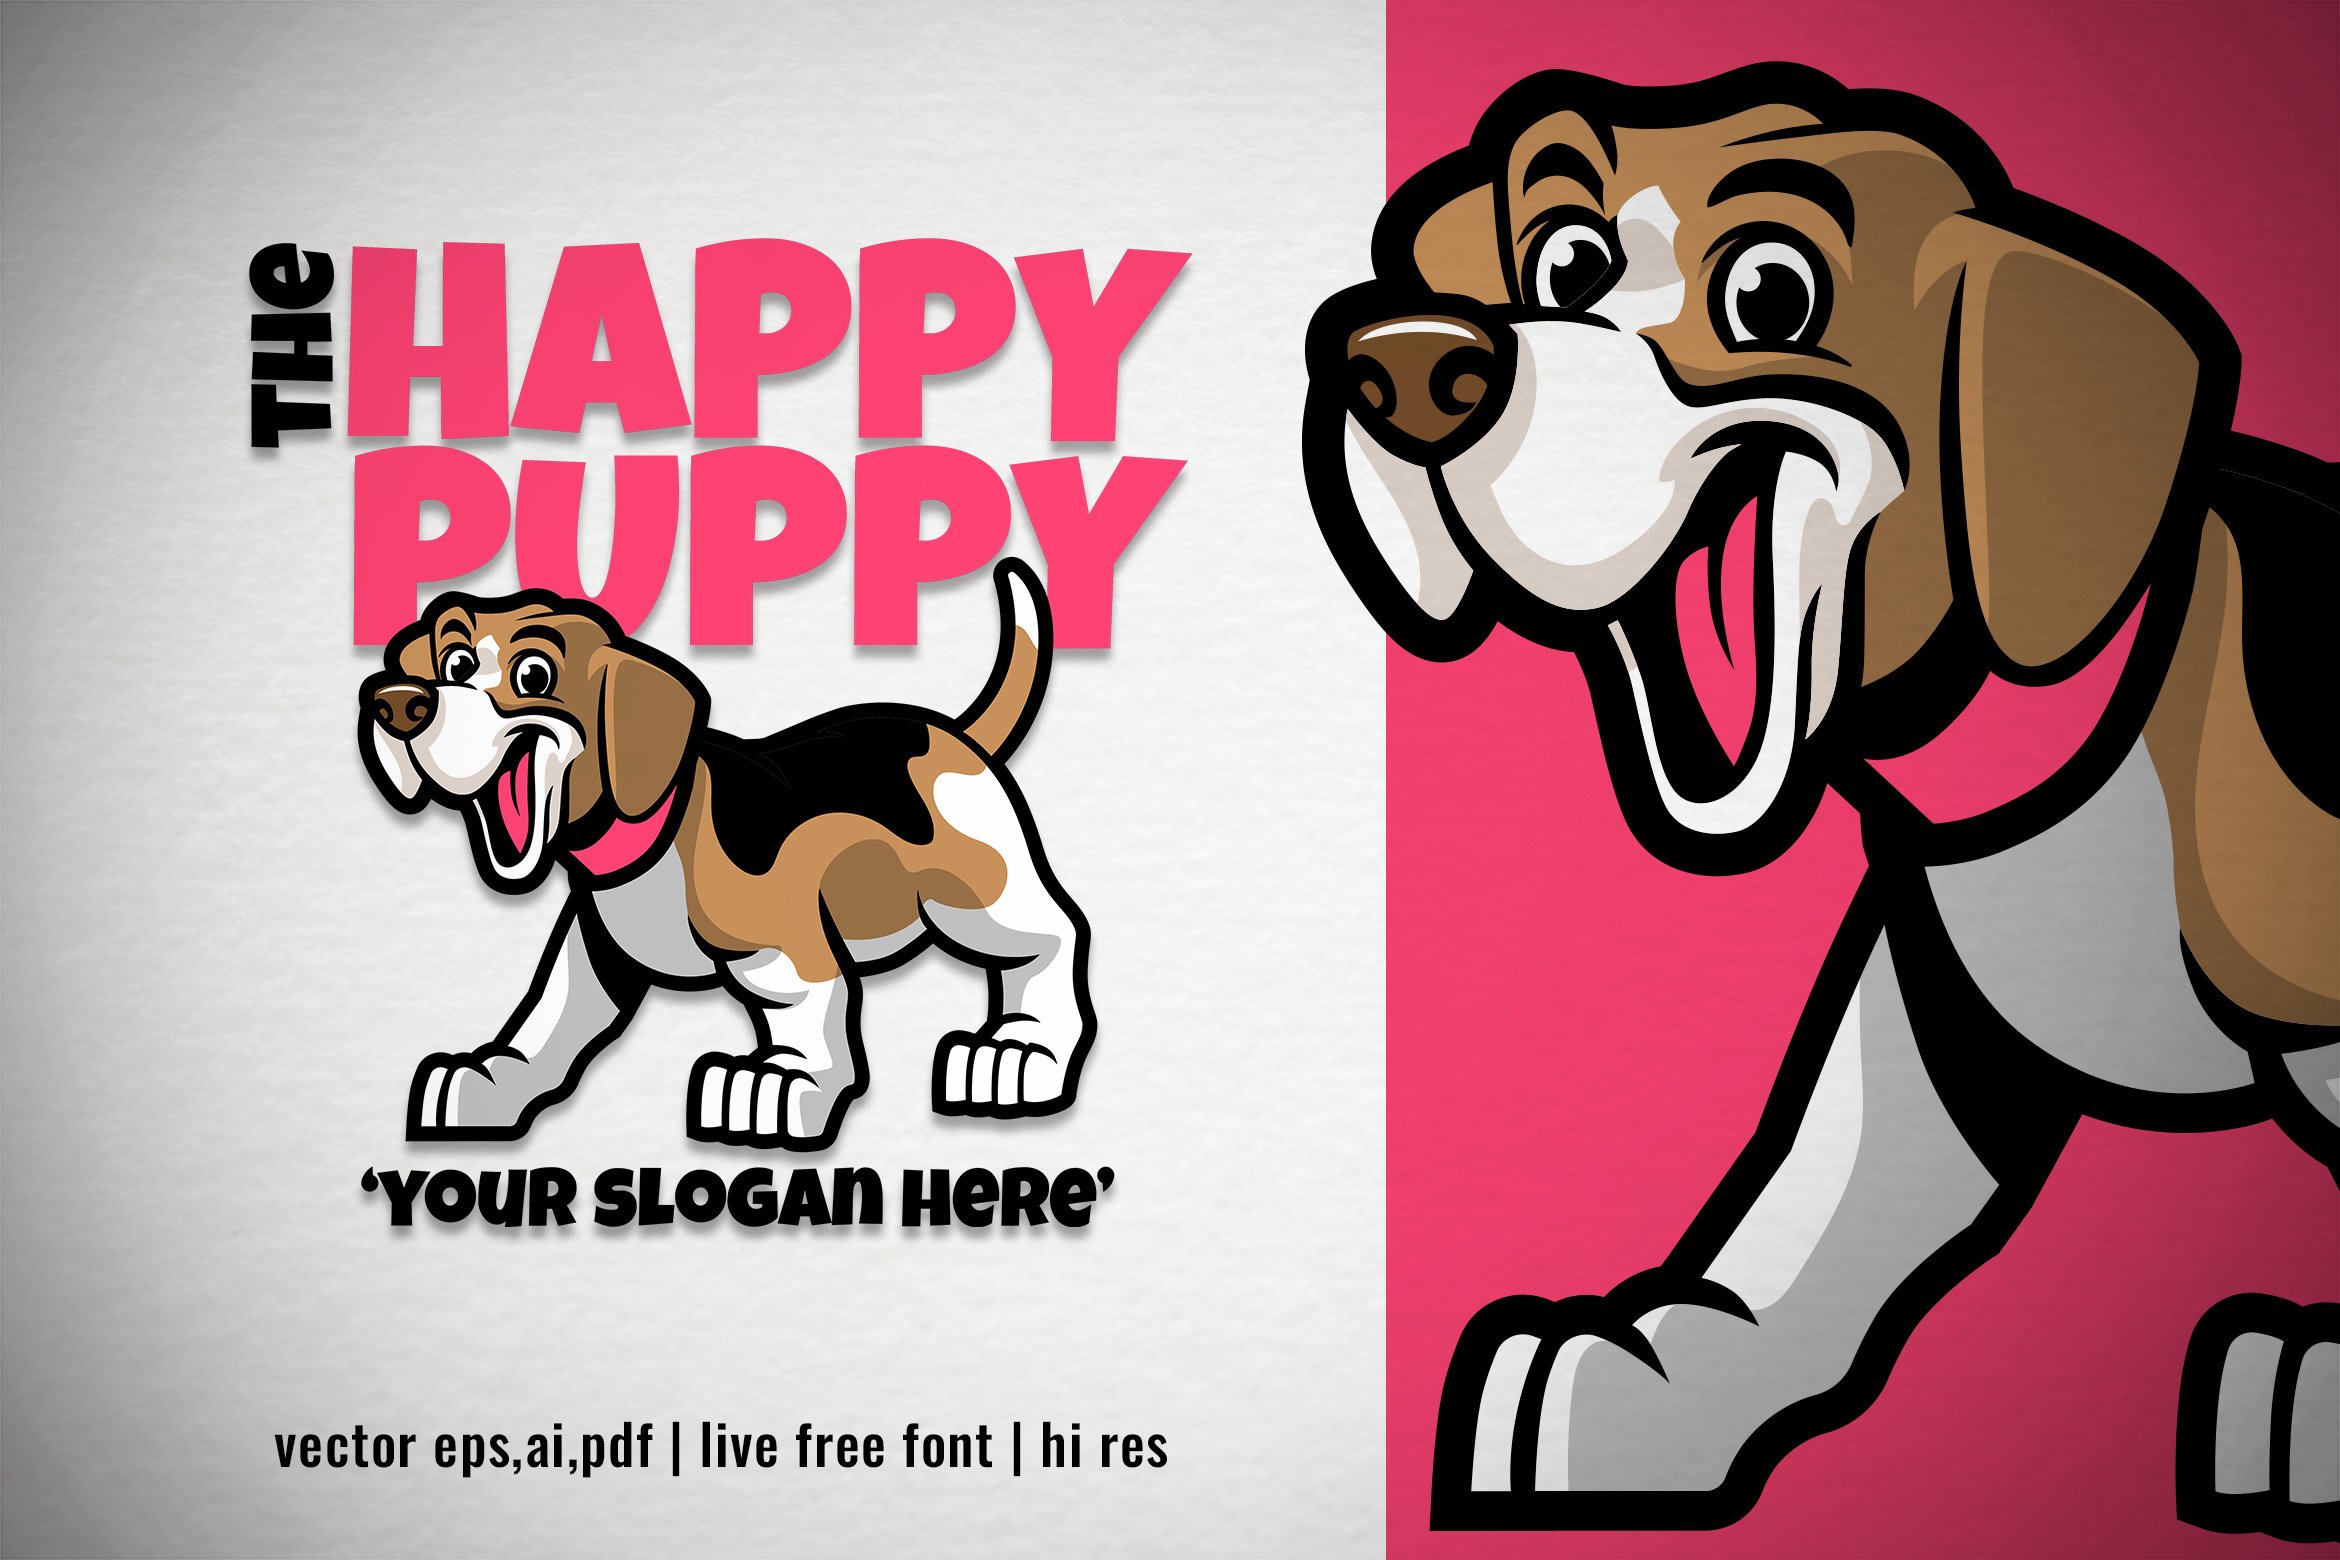 Cartoon Puppy of Beagle Dog Logo cover image.